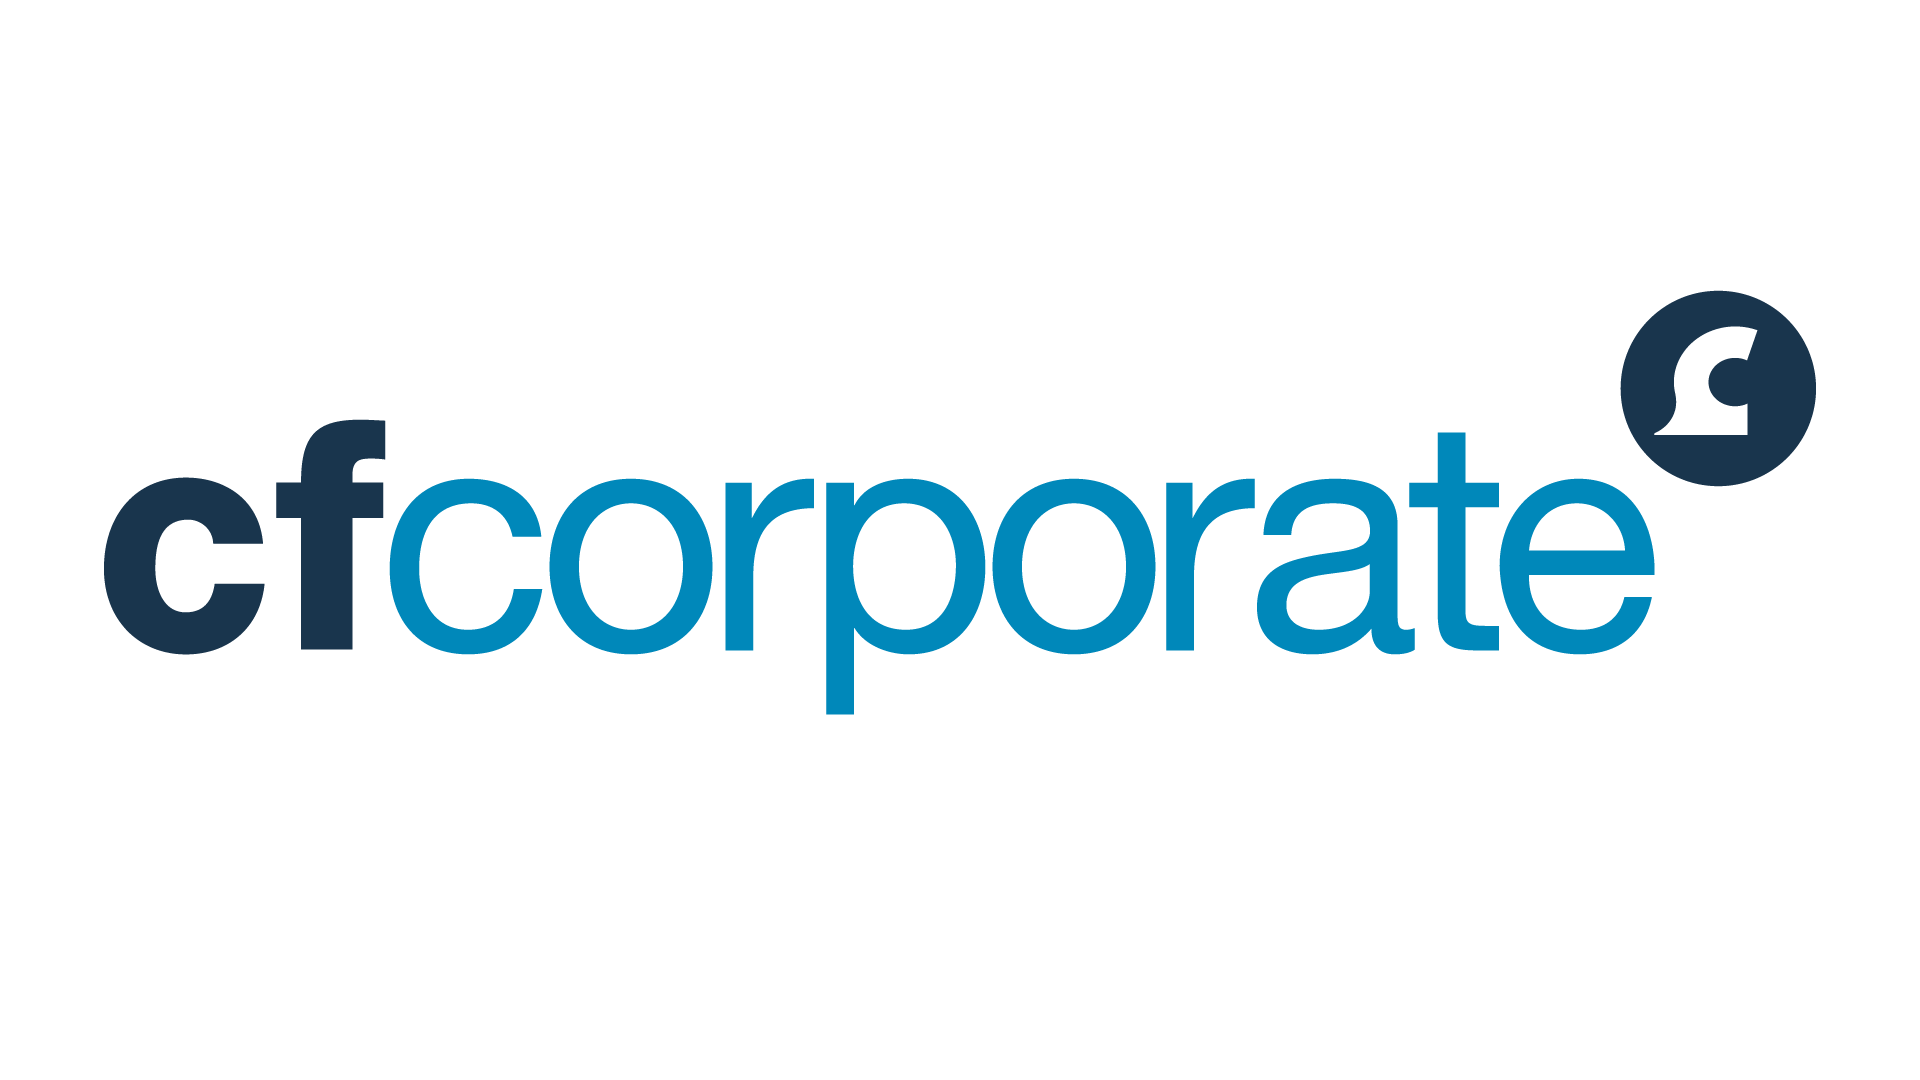 Customer Page_CF Corporate Finance logo